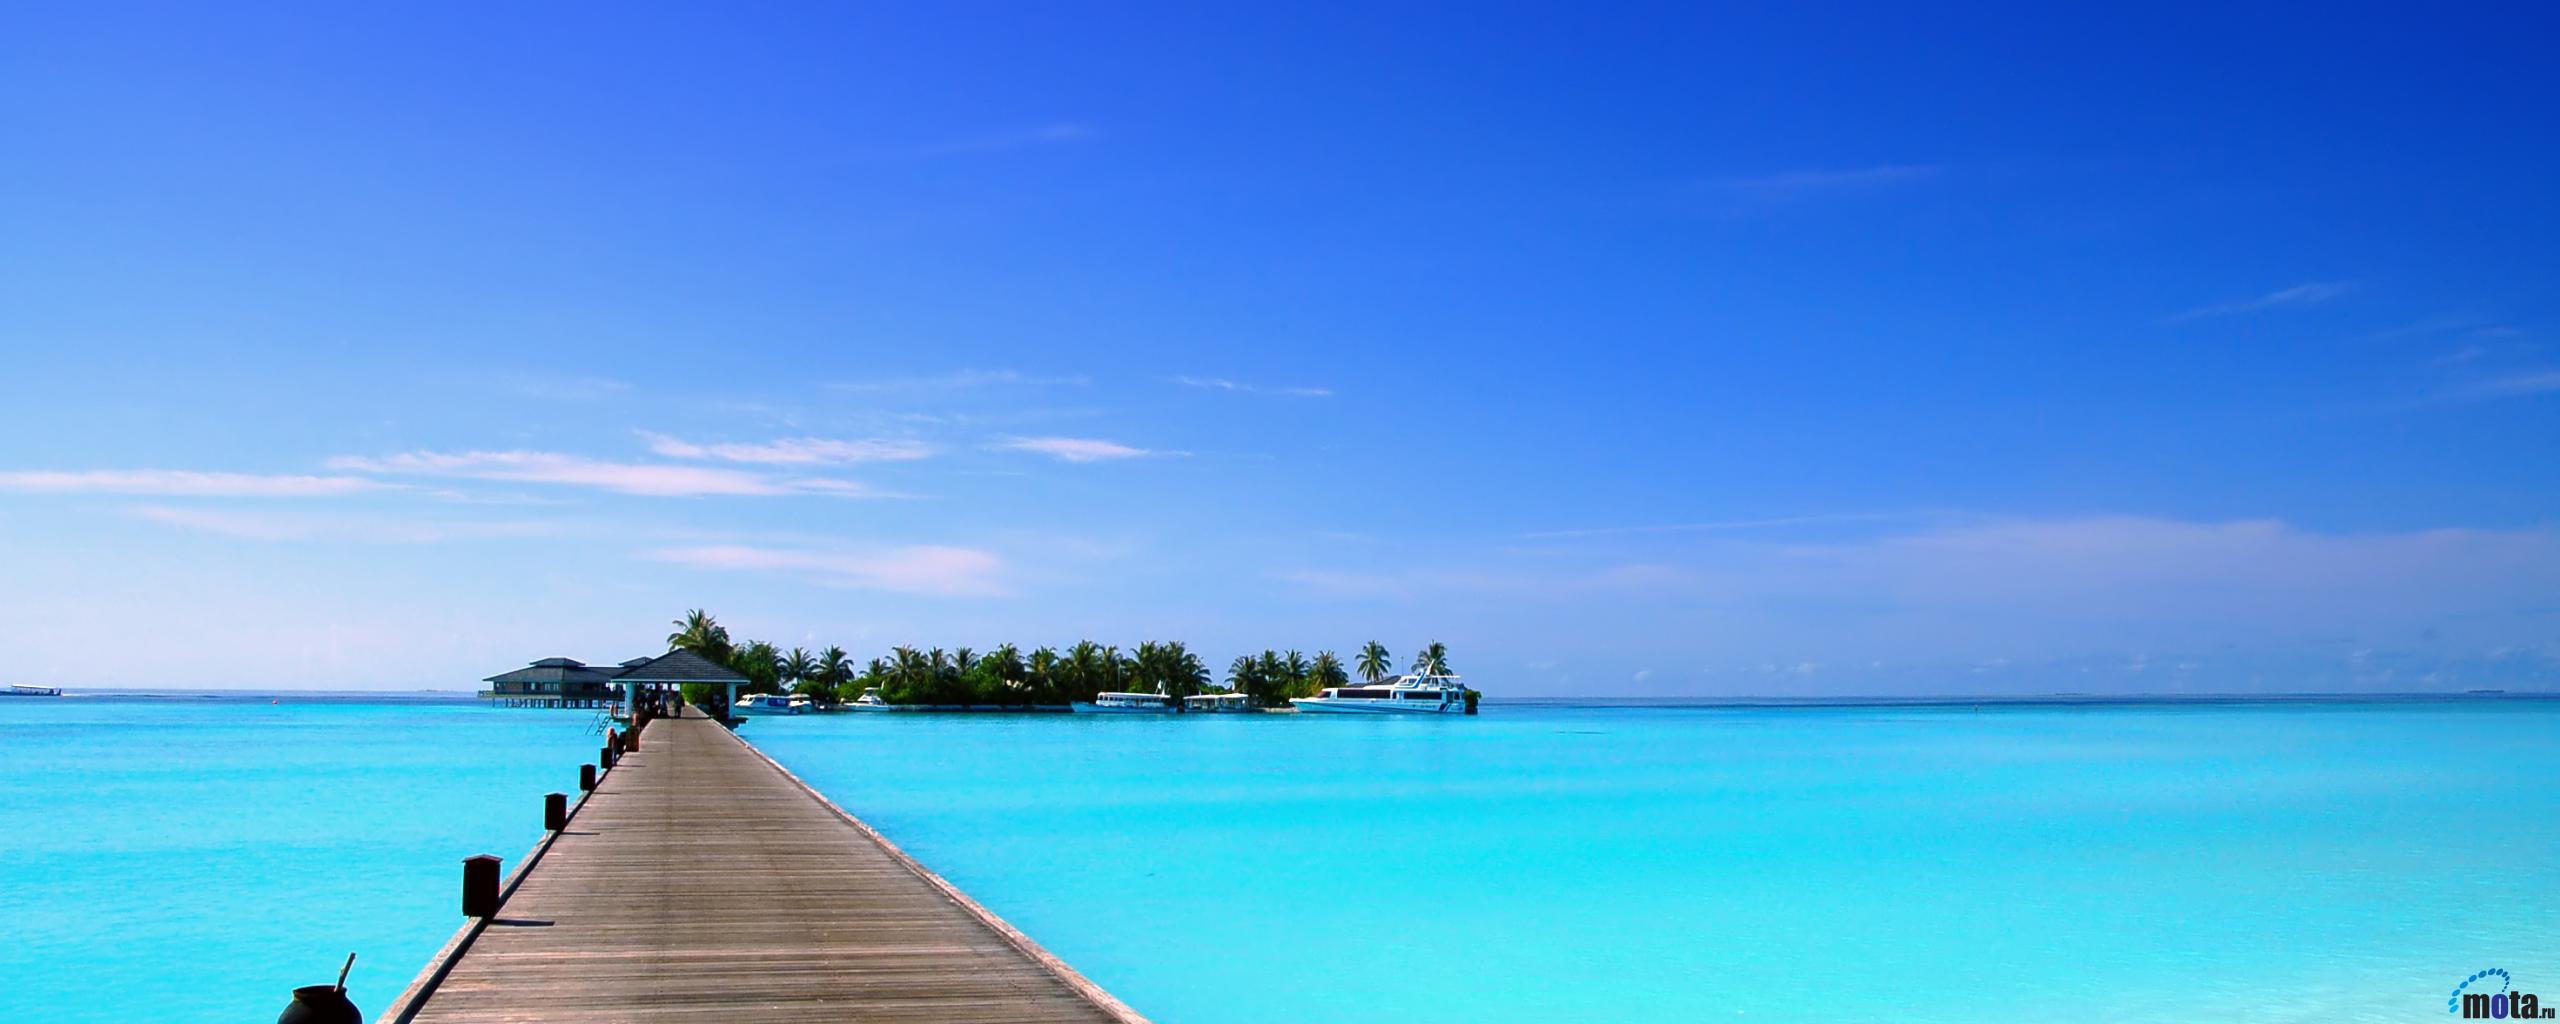 Wallpaper Sun Island Hotel Maldives Islands X Dual Monitor